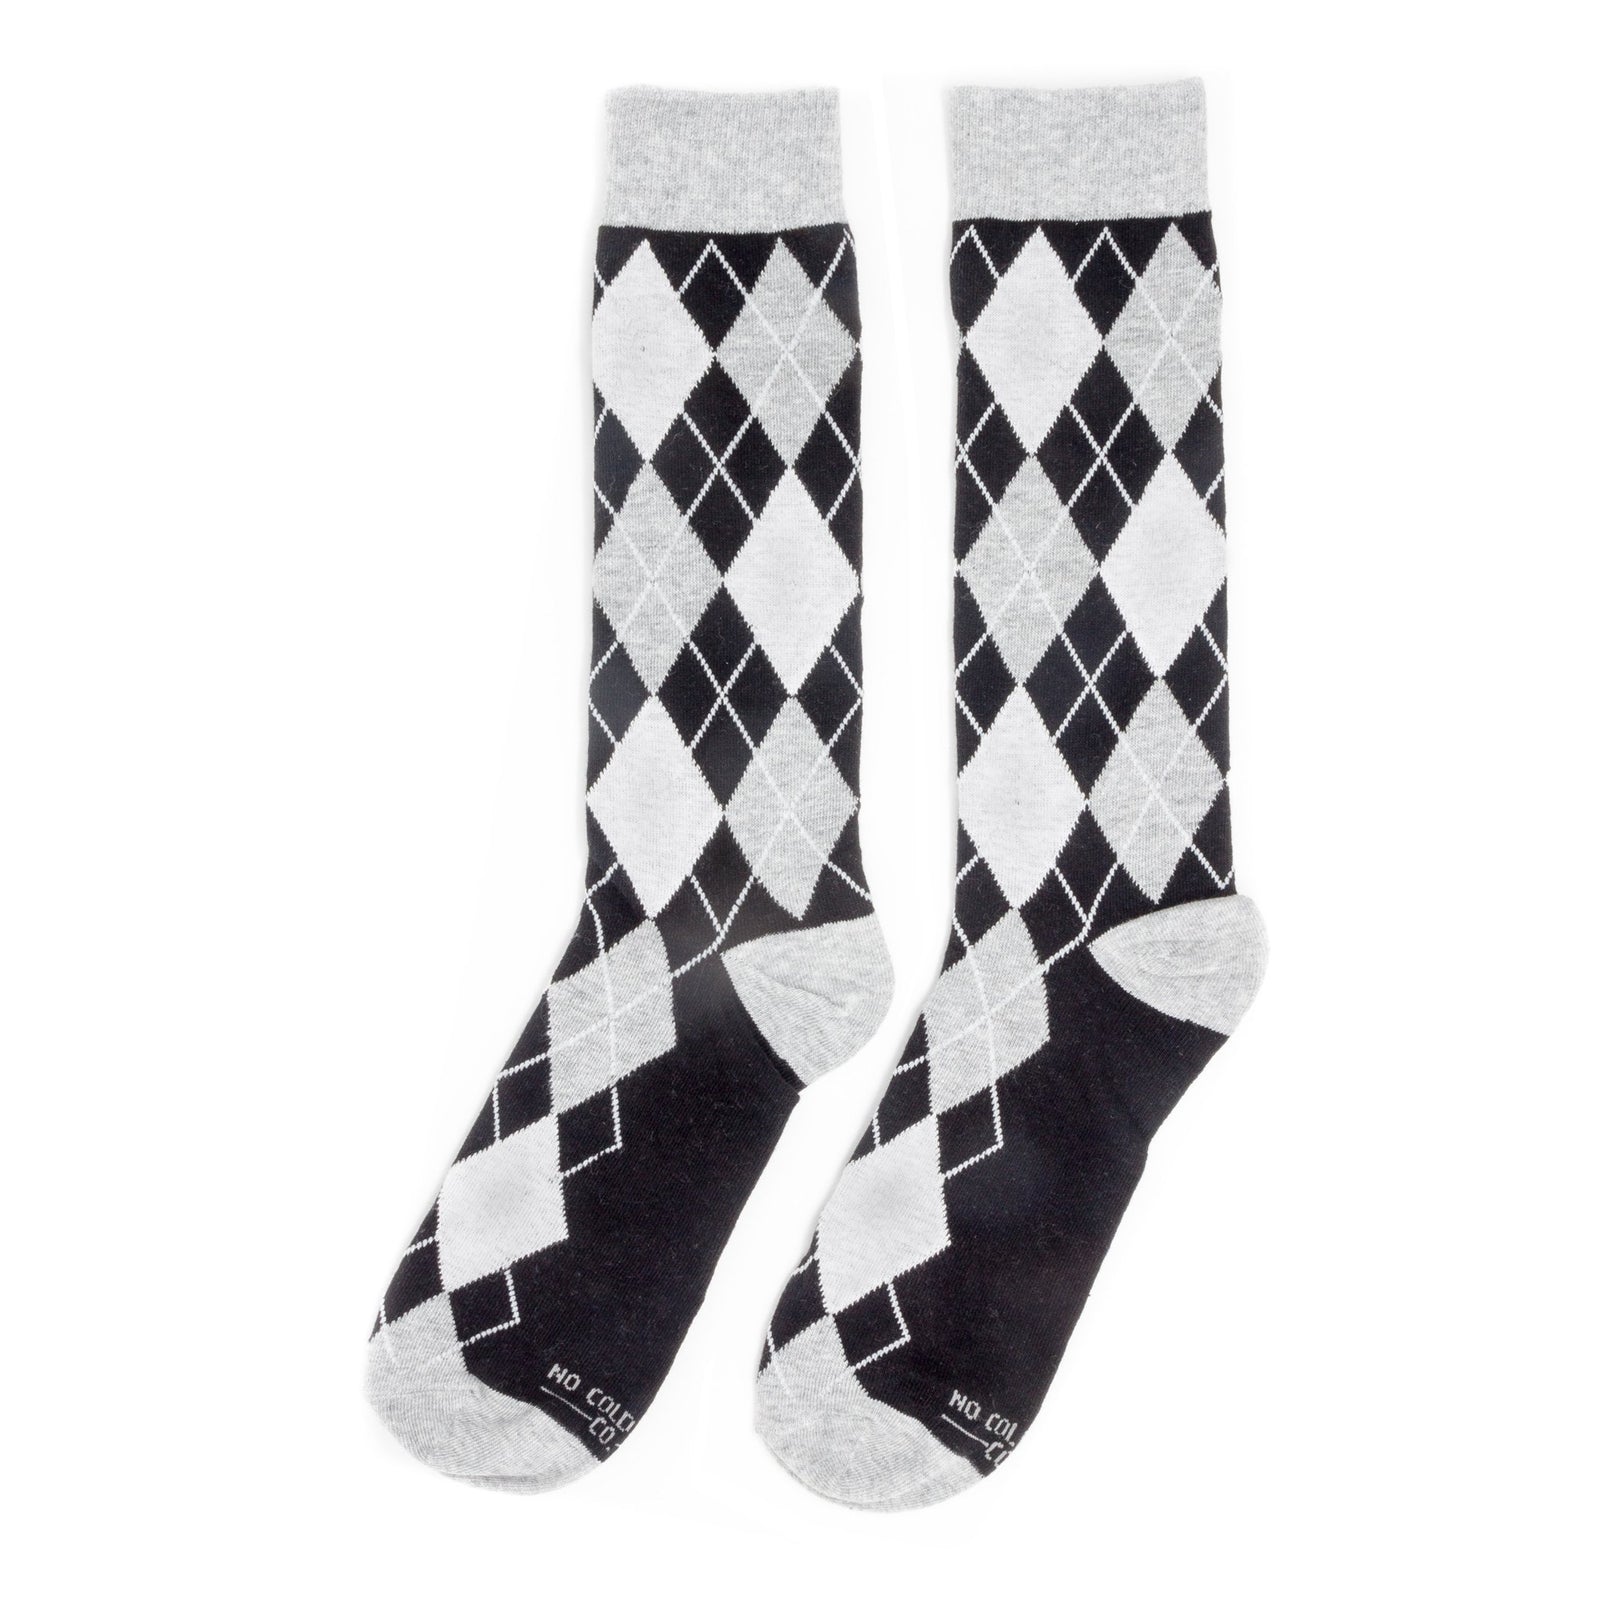  Glohox Custom Grooms Socks for Wedding, Personalized